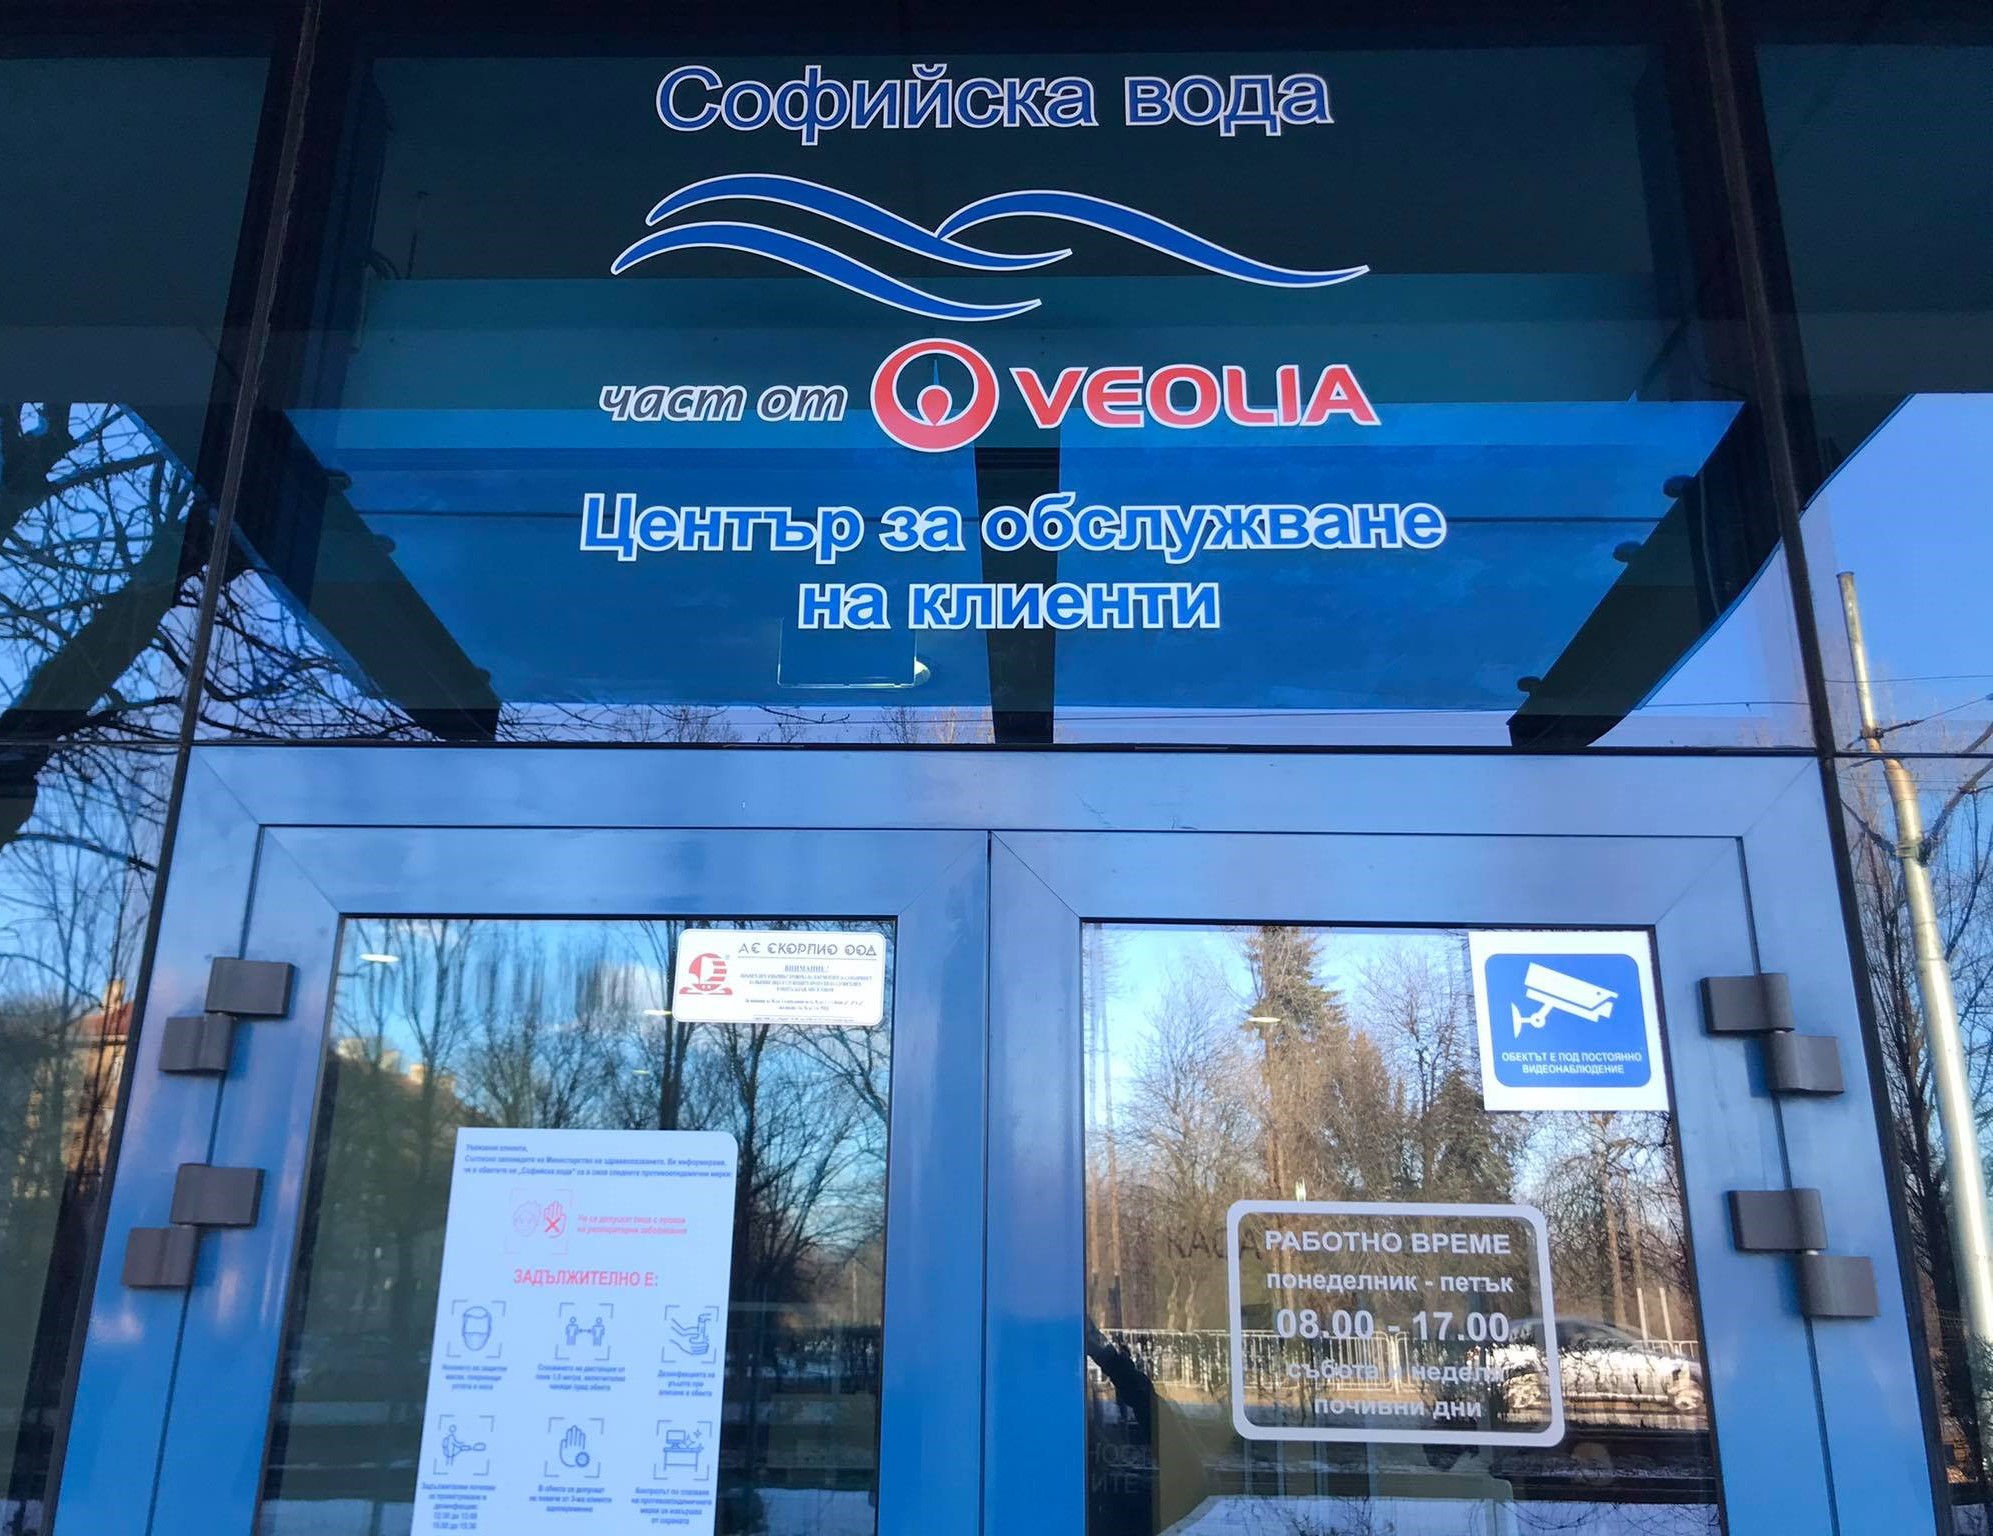 A new customer service center of Sofiyska Voda will open its doors on February 1st